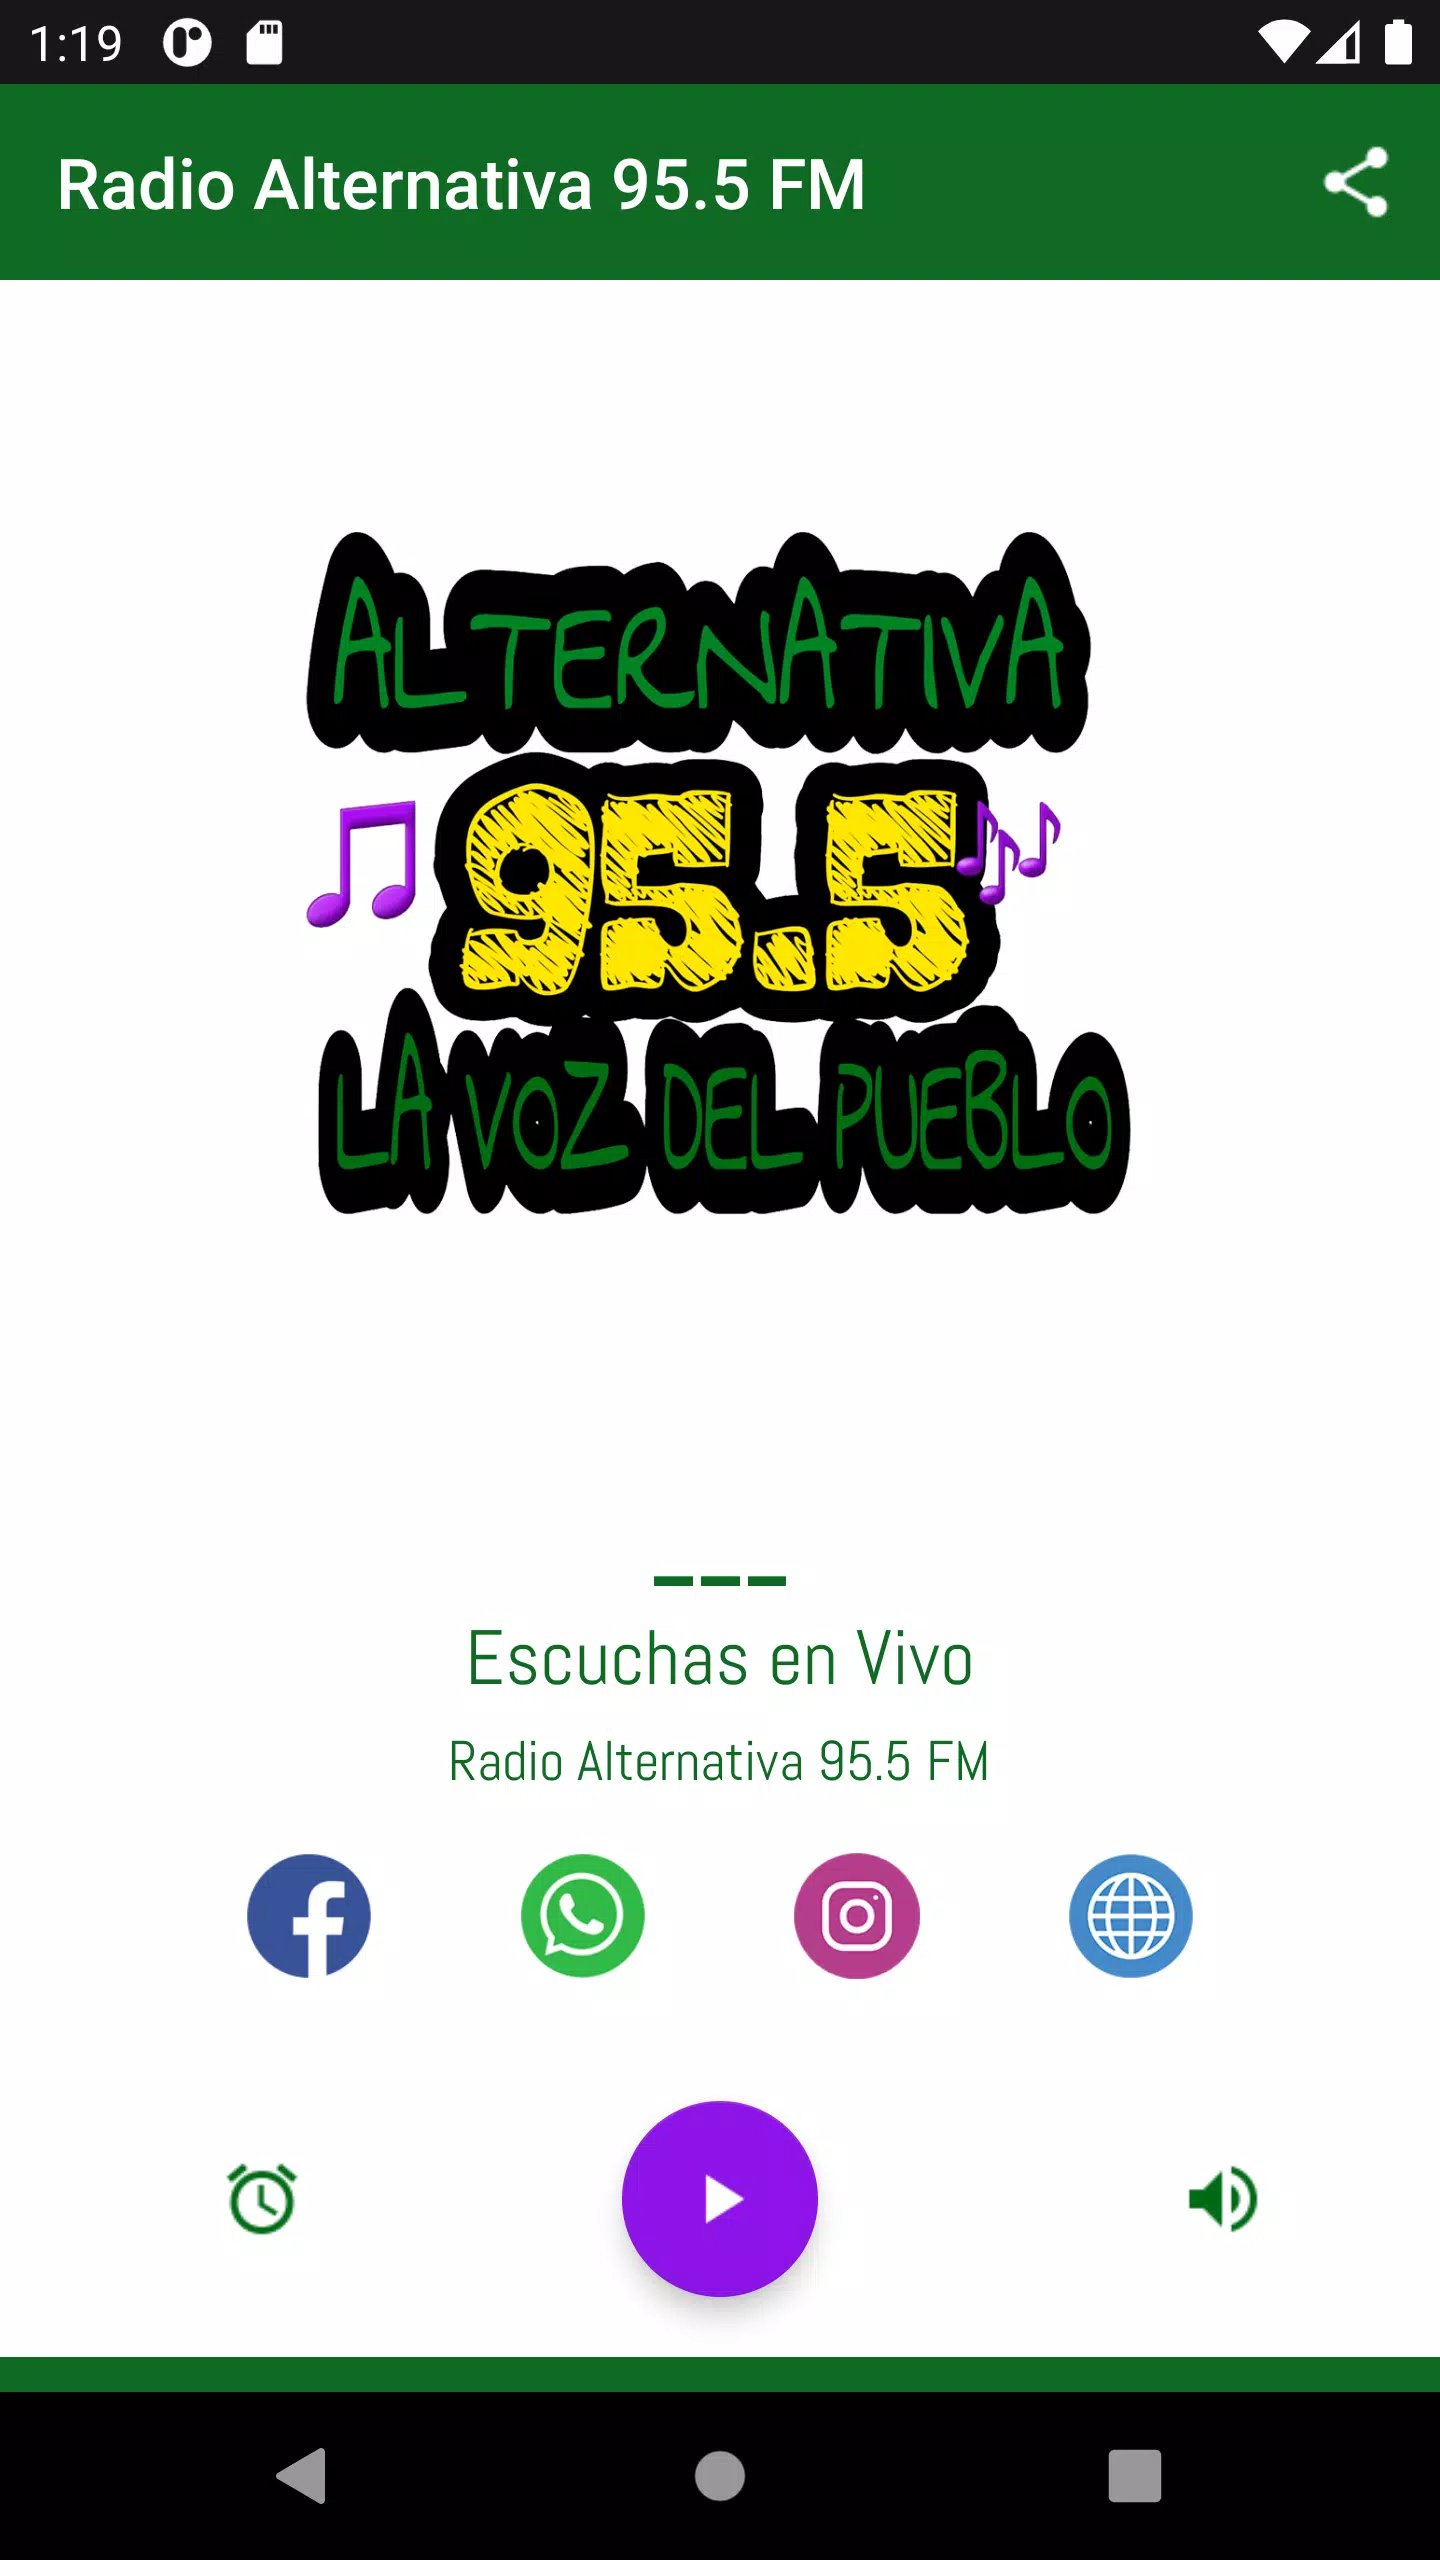 Radio Alternativa 95.5 FM for Android - APK Download